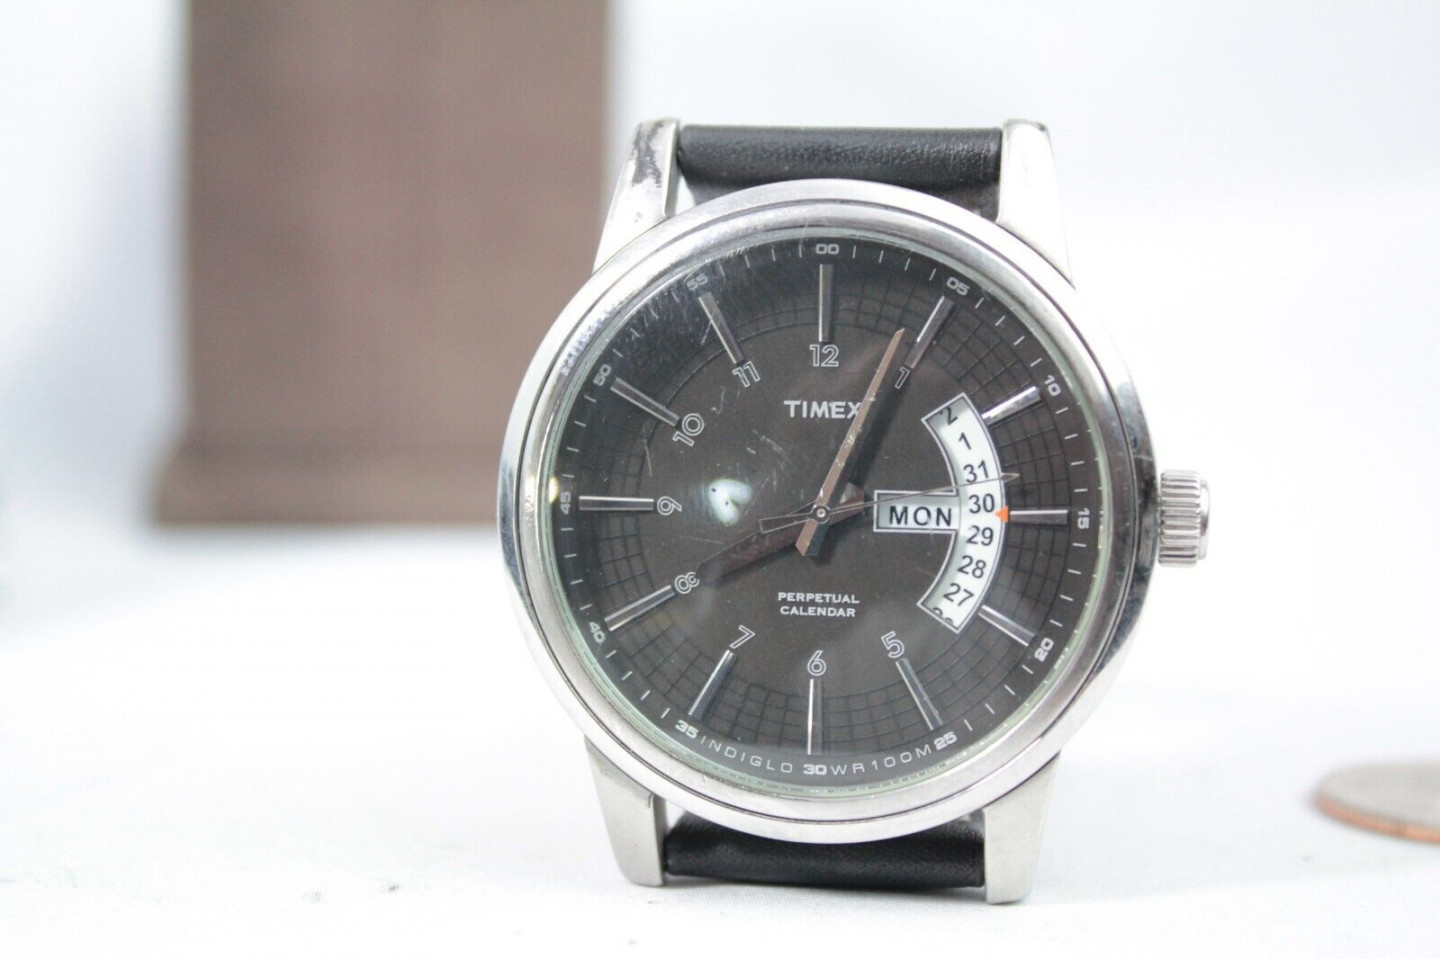 Vintage TIMEX Perpetual Calendar Color: Black Wrist watch